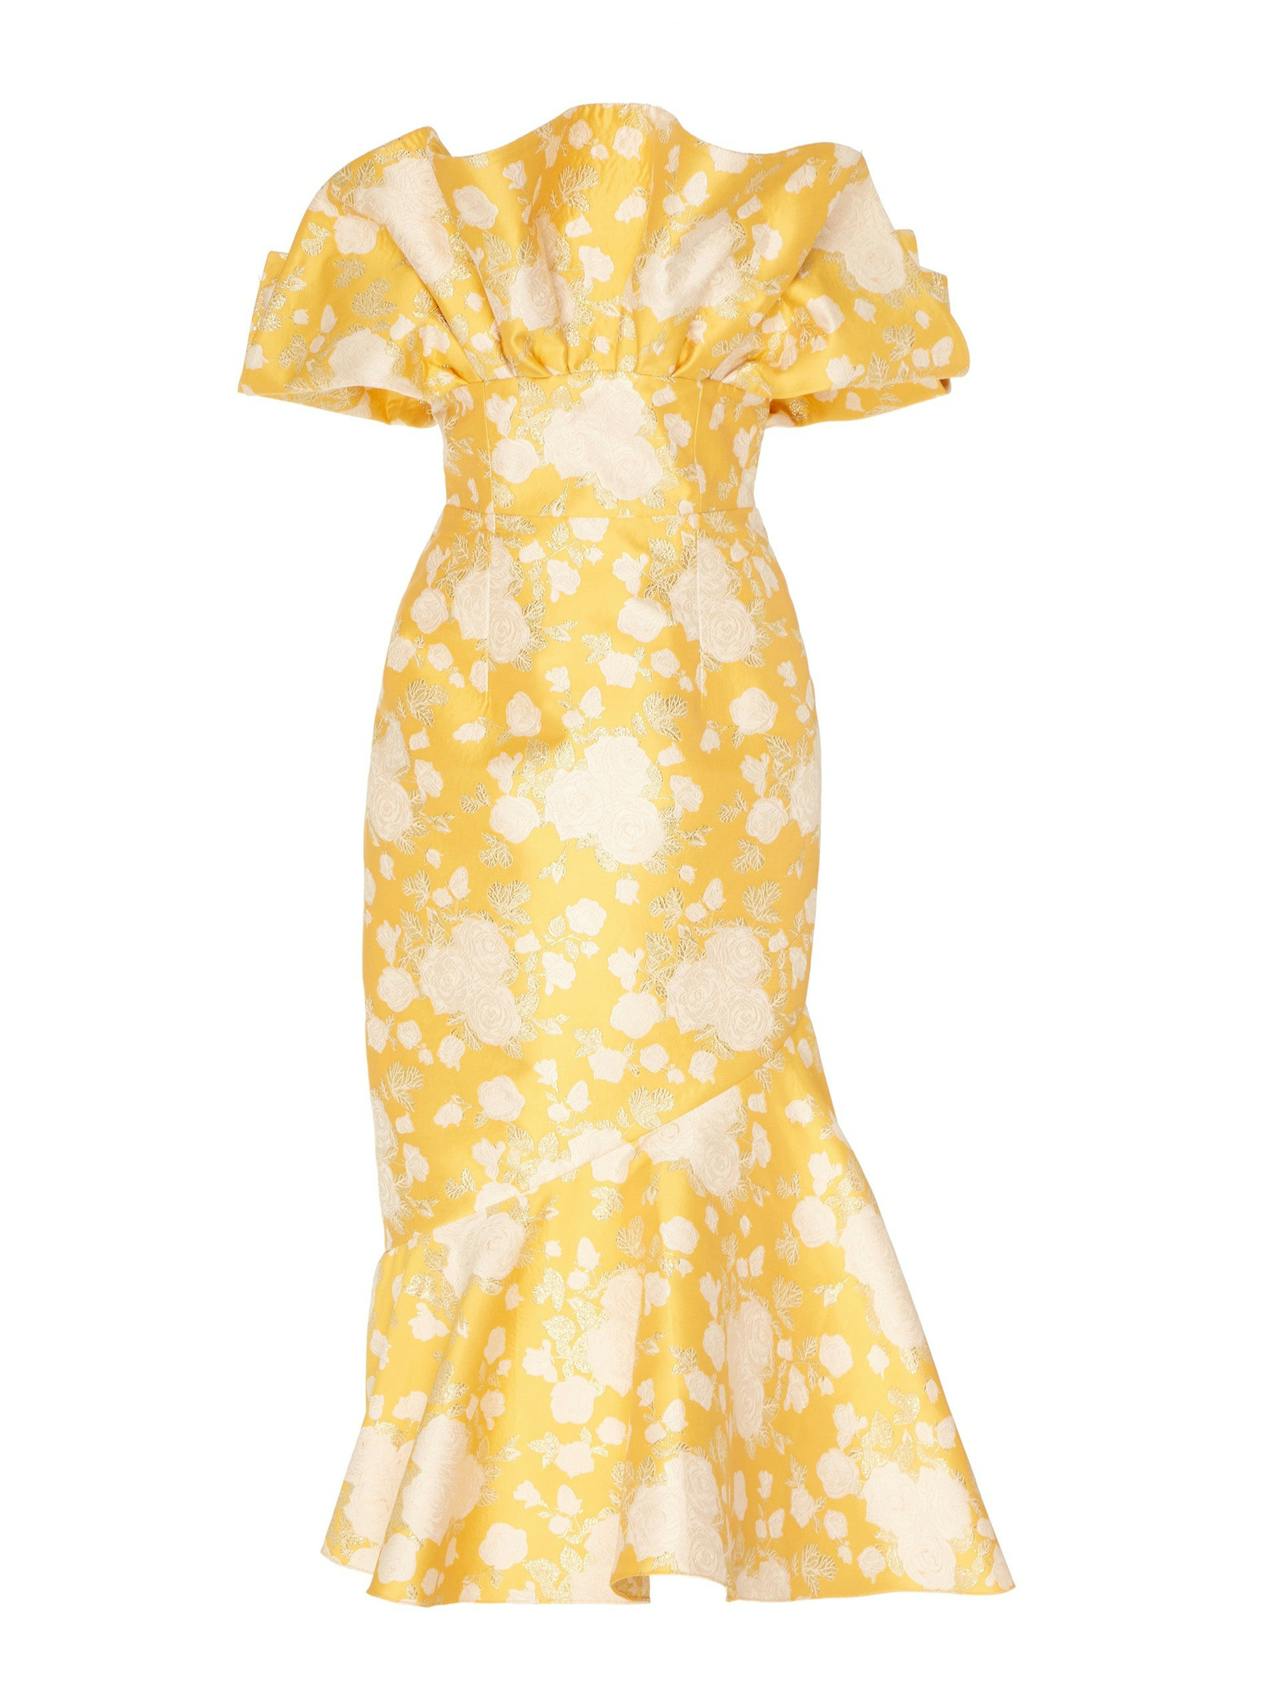 Demeter yellow floral brocade dress